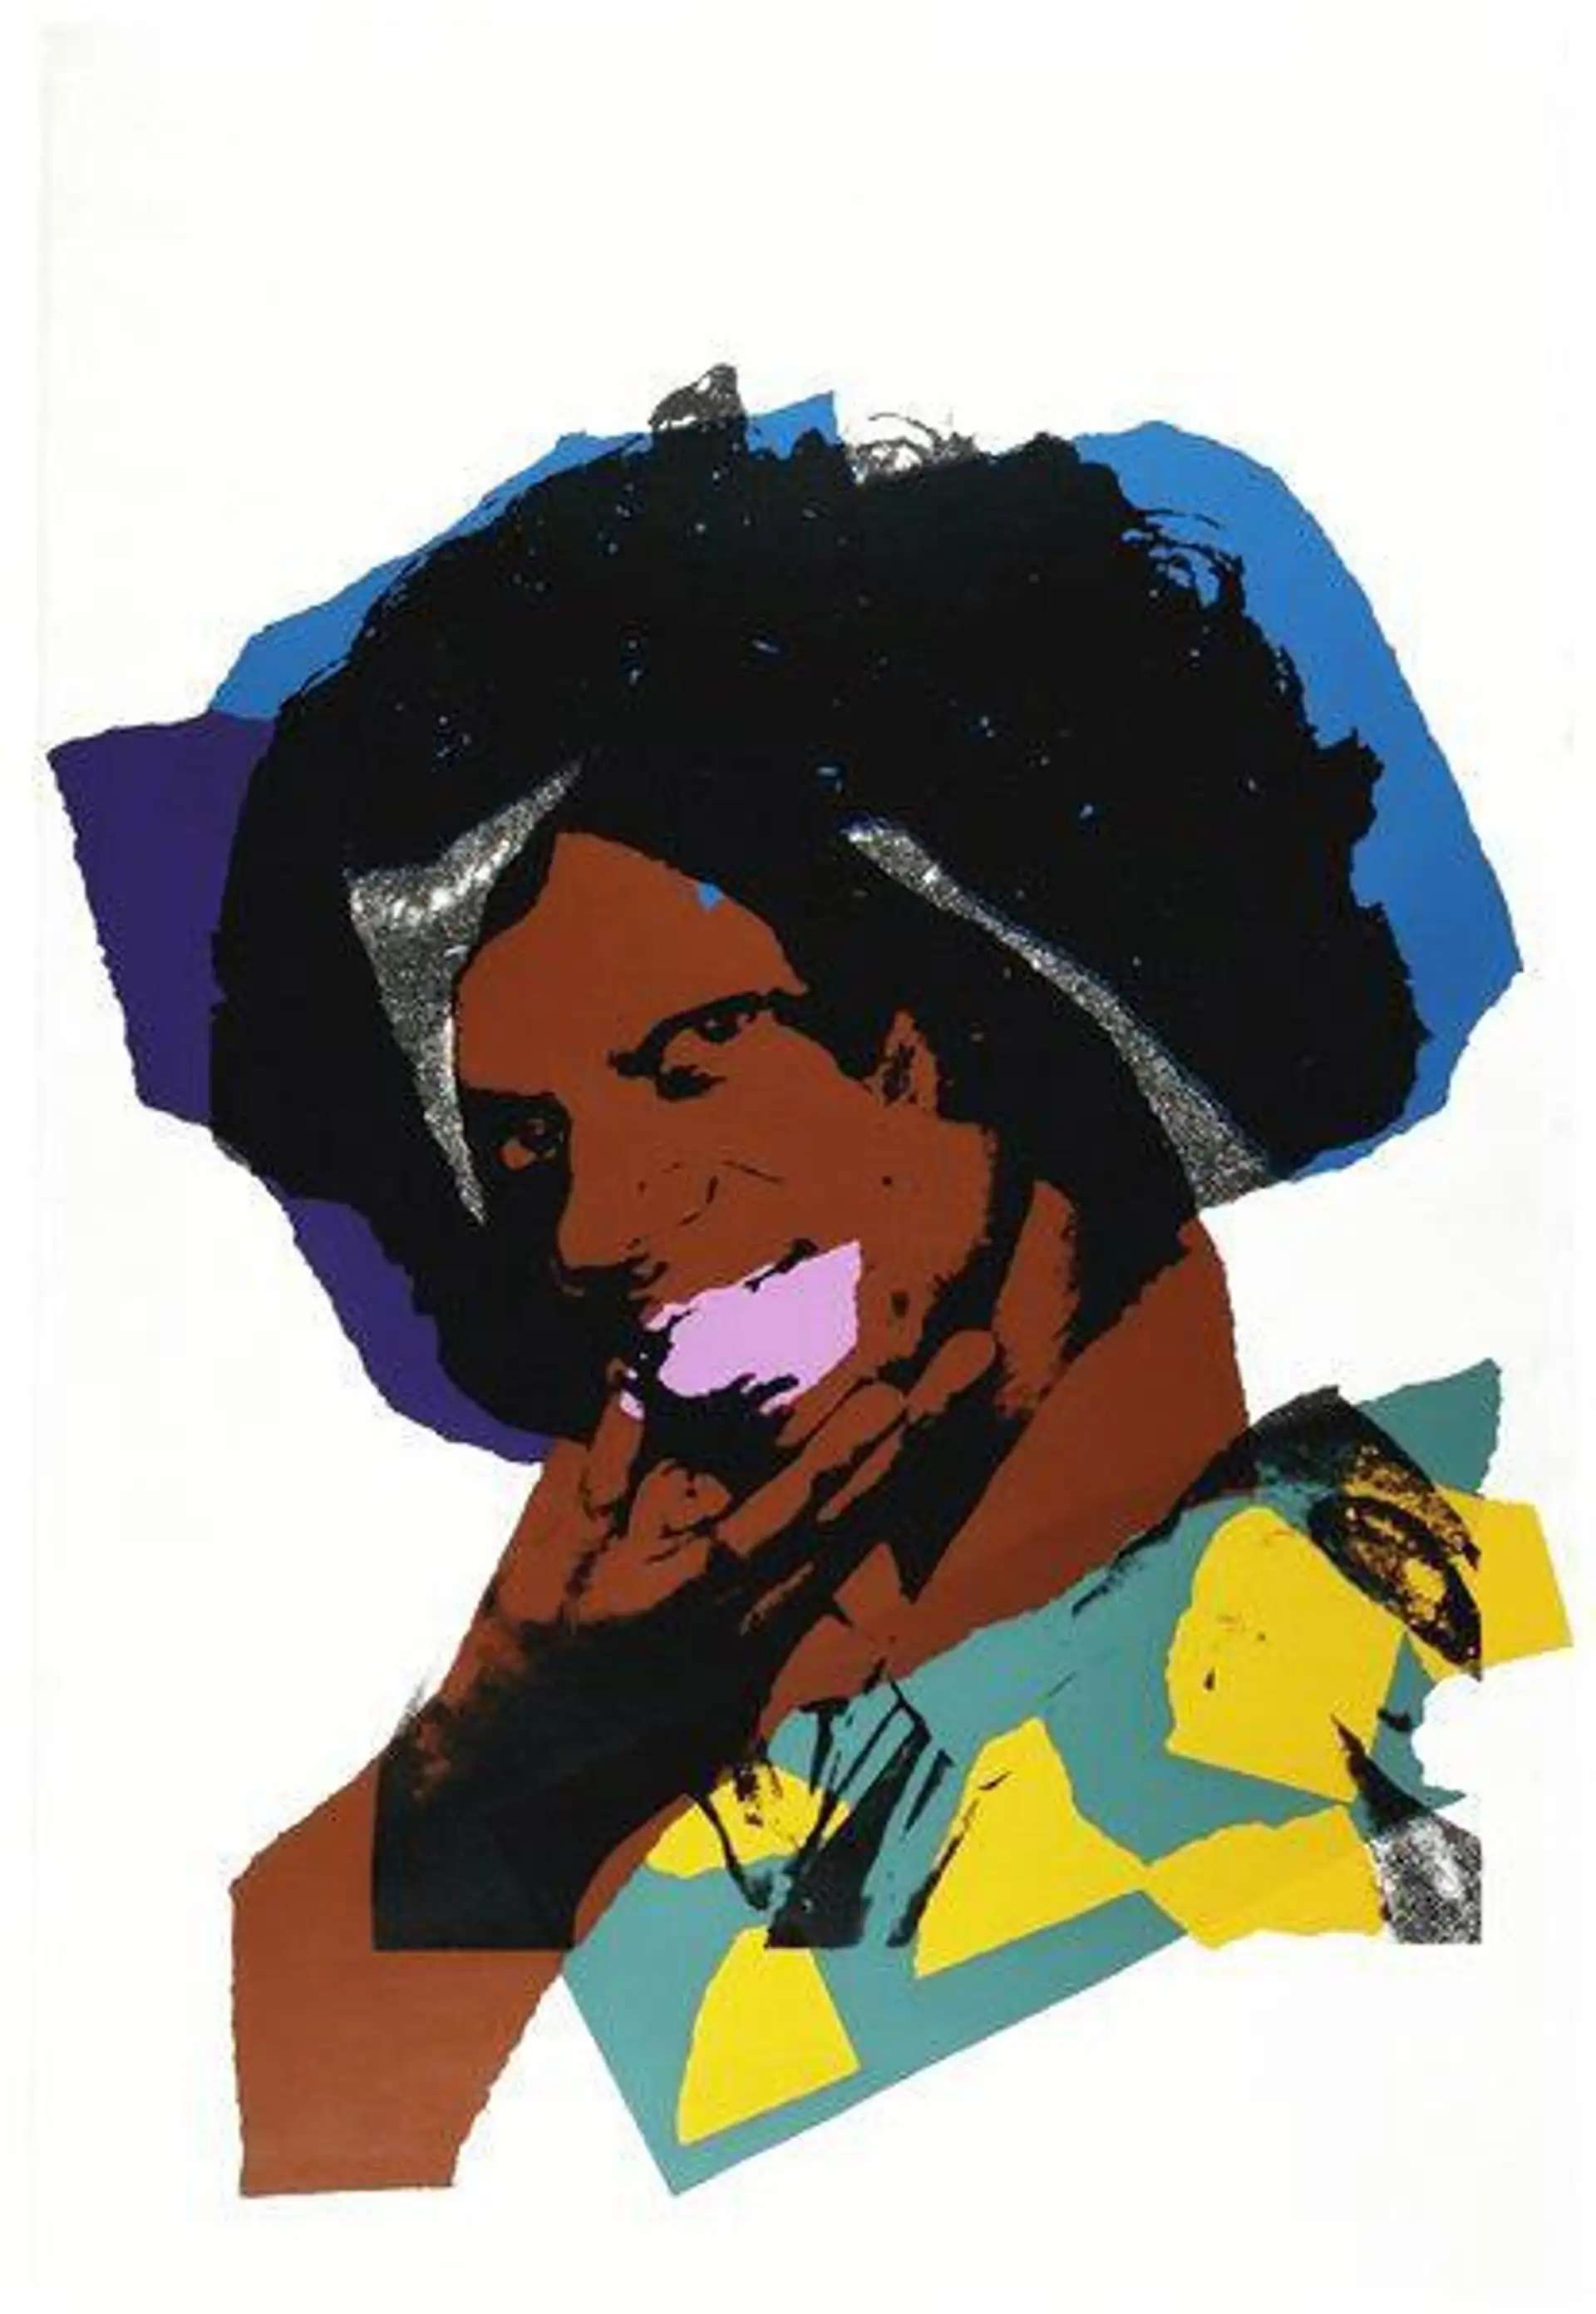  Ladies And Gentlemen (F. & S. II.137) by Andy Warhol